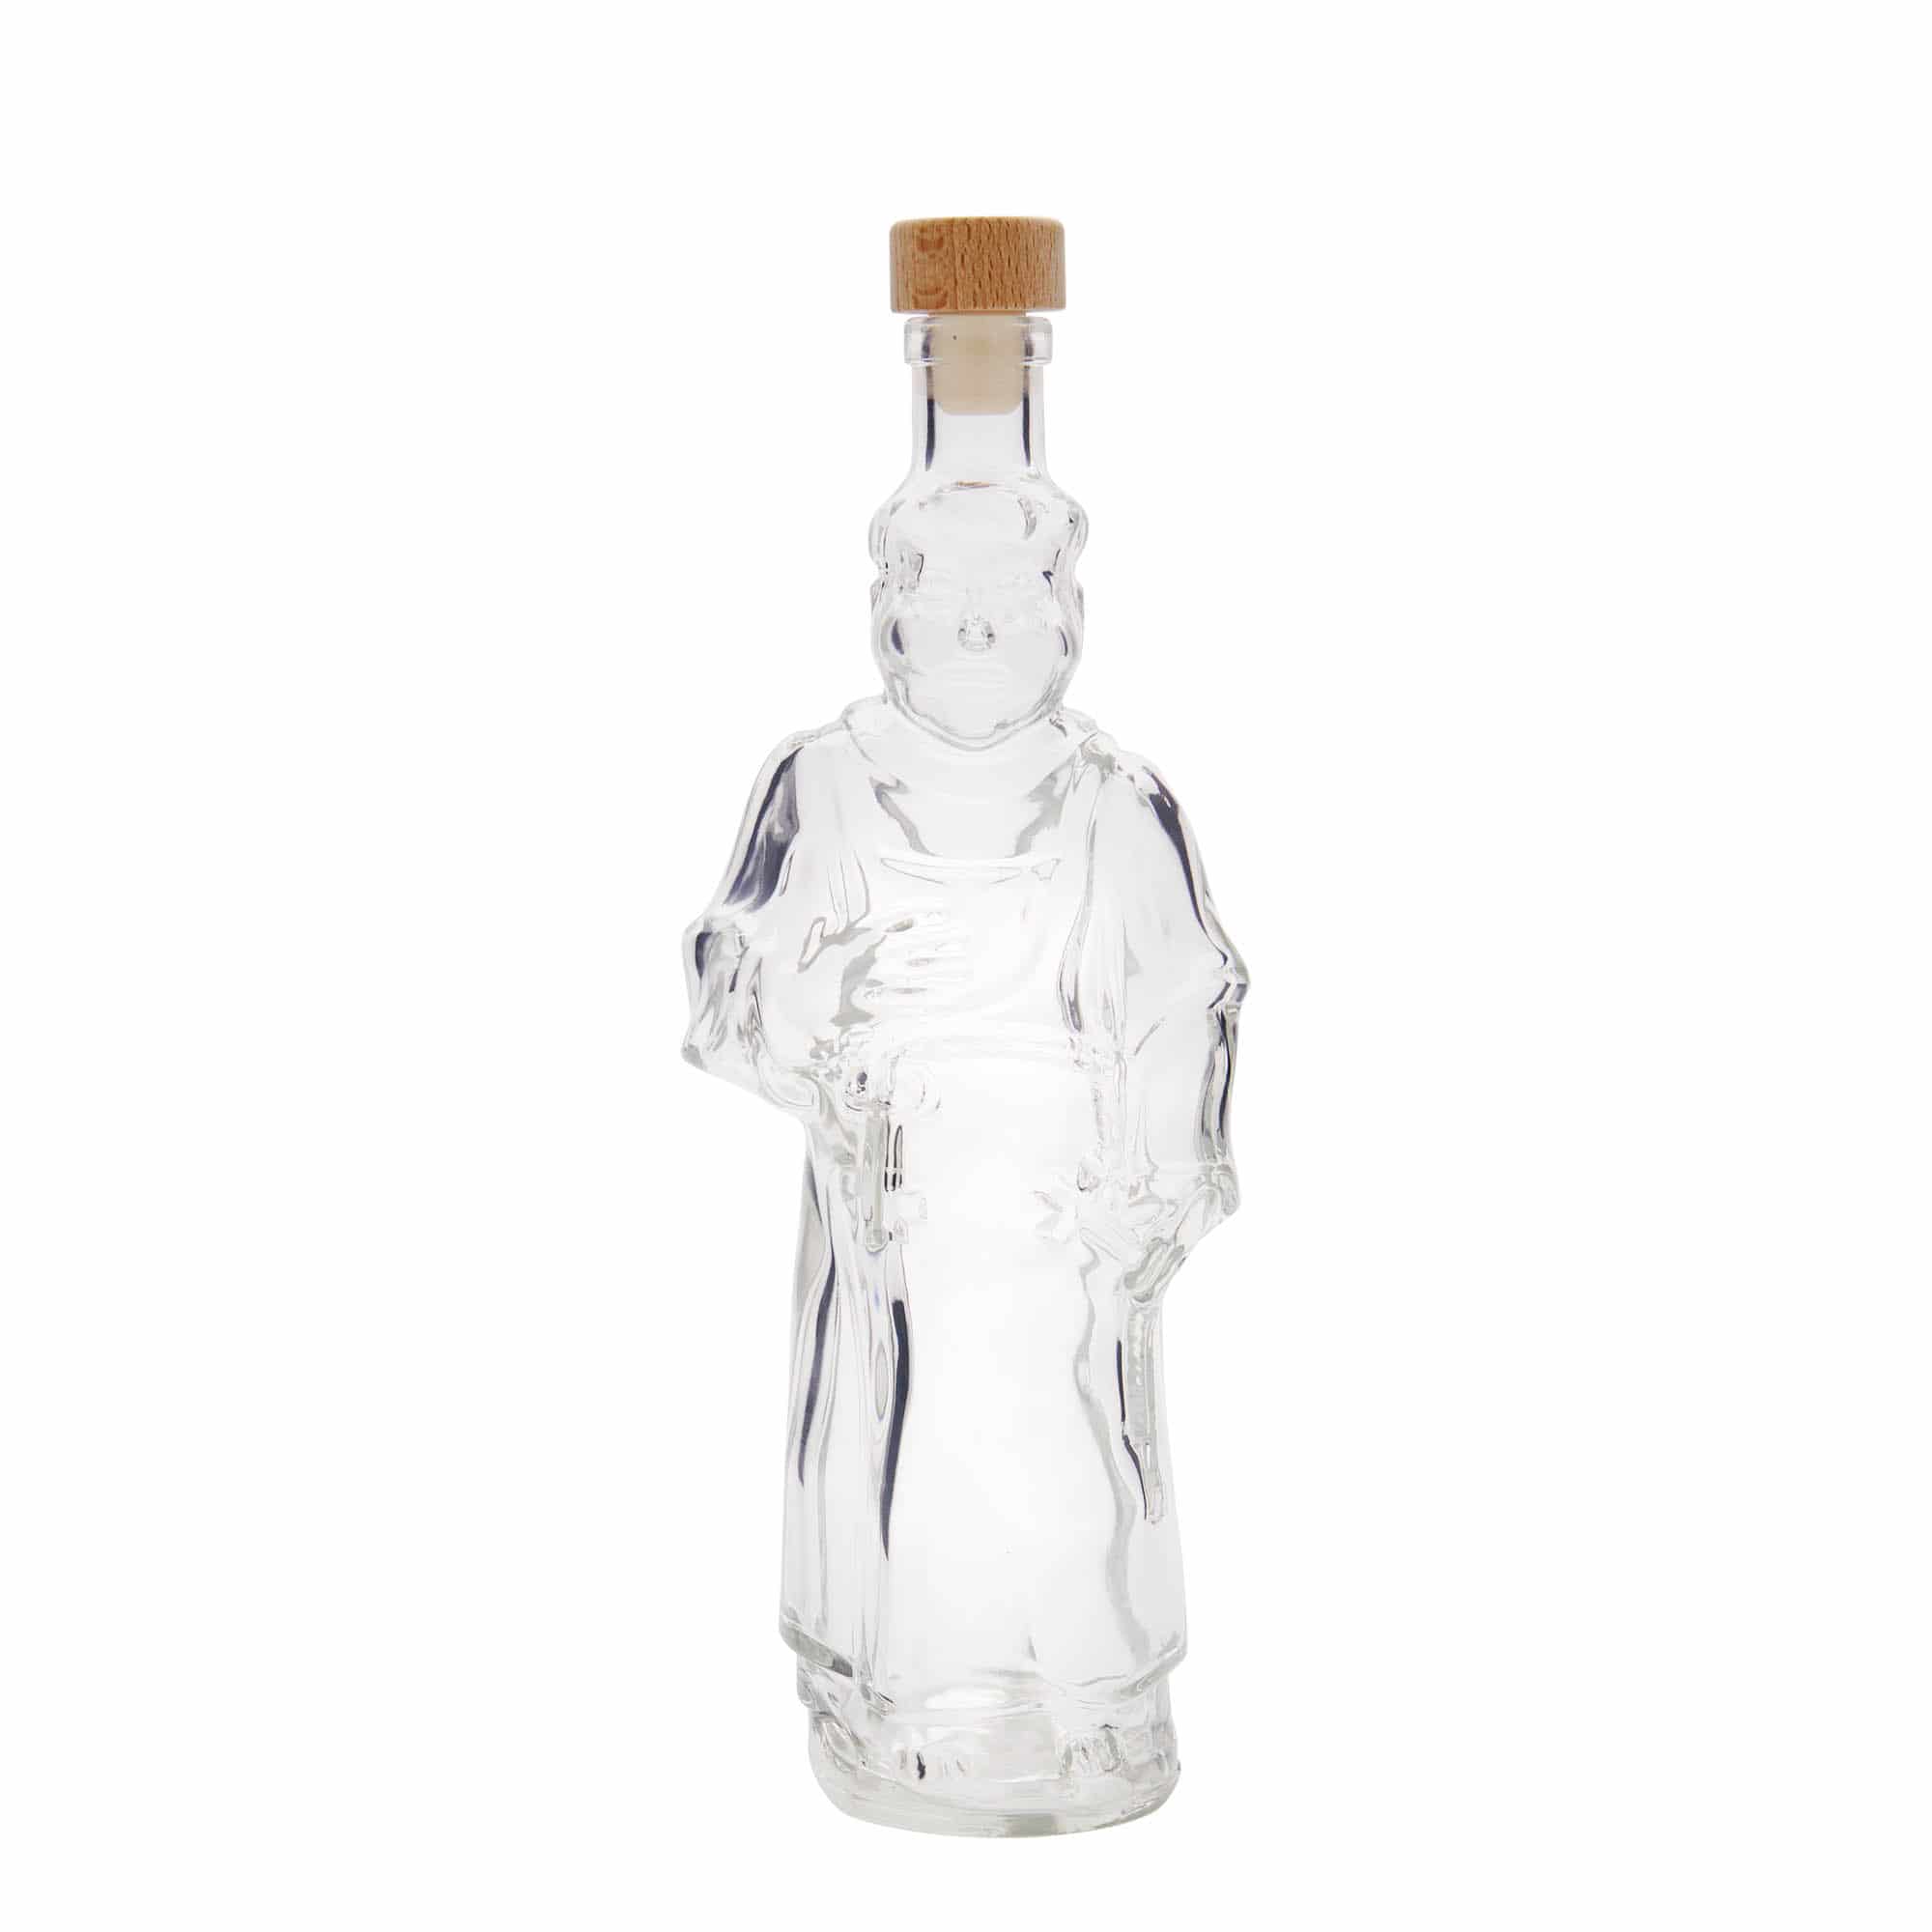 350 ml glass bottle 'Monk', closure: cork